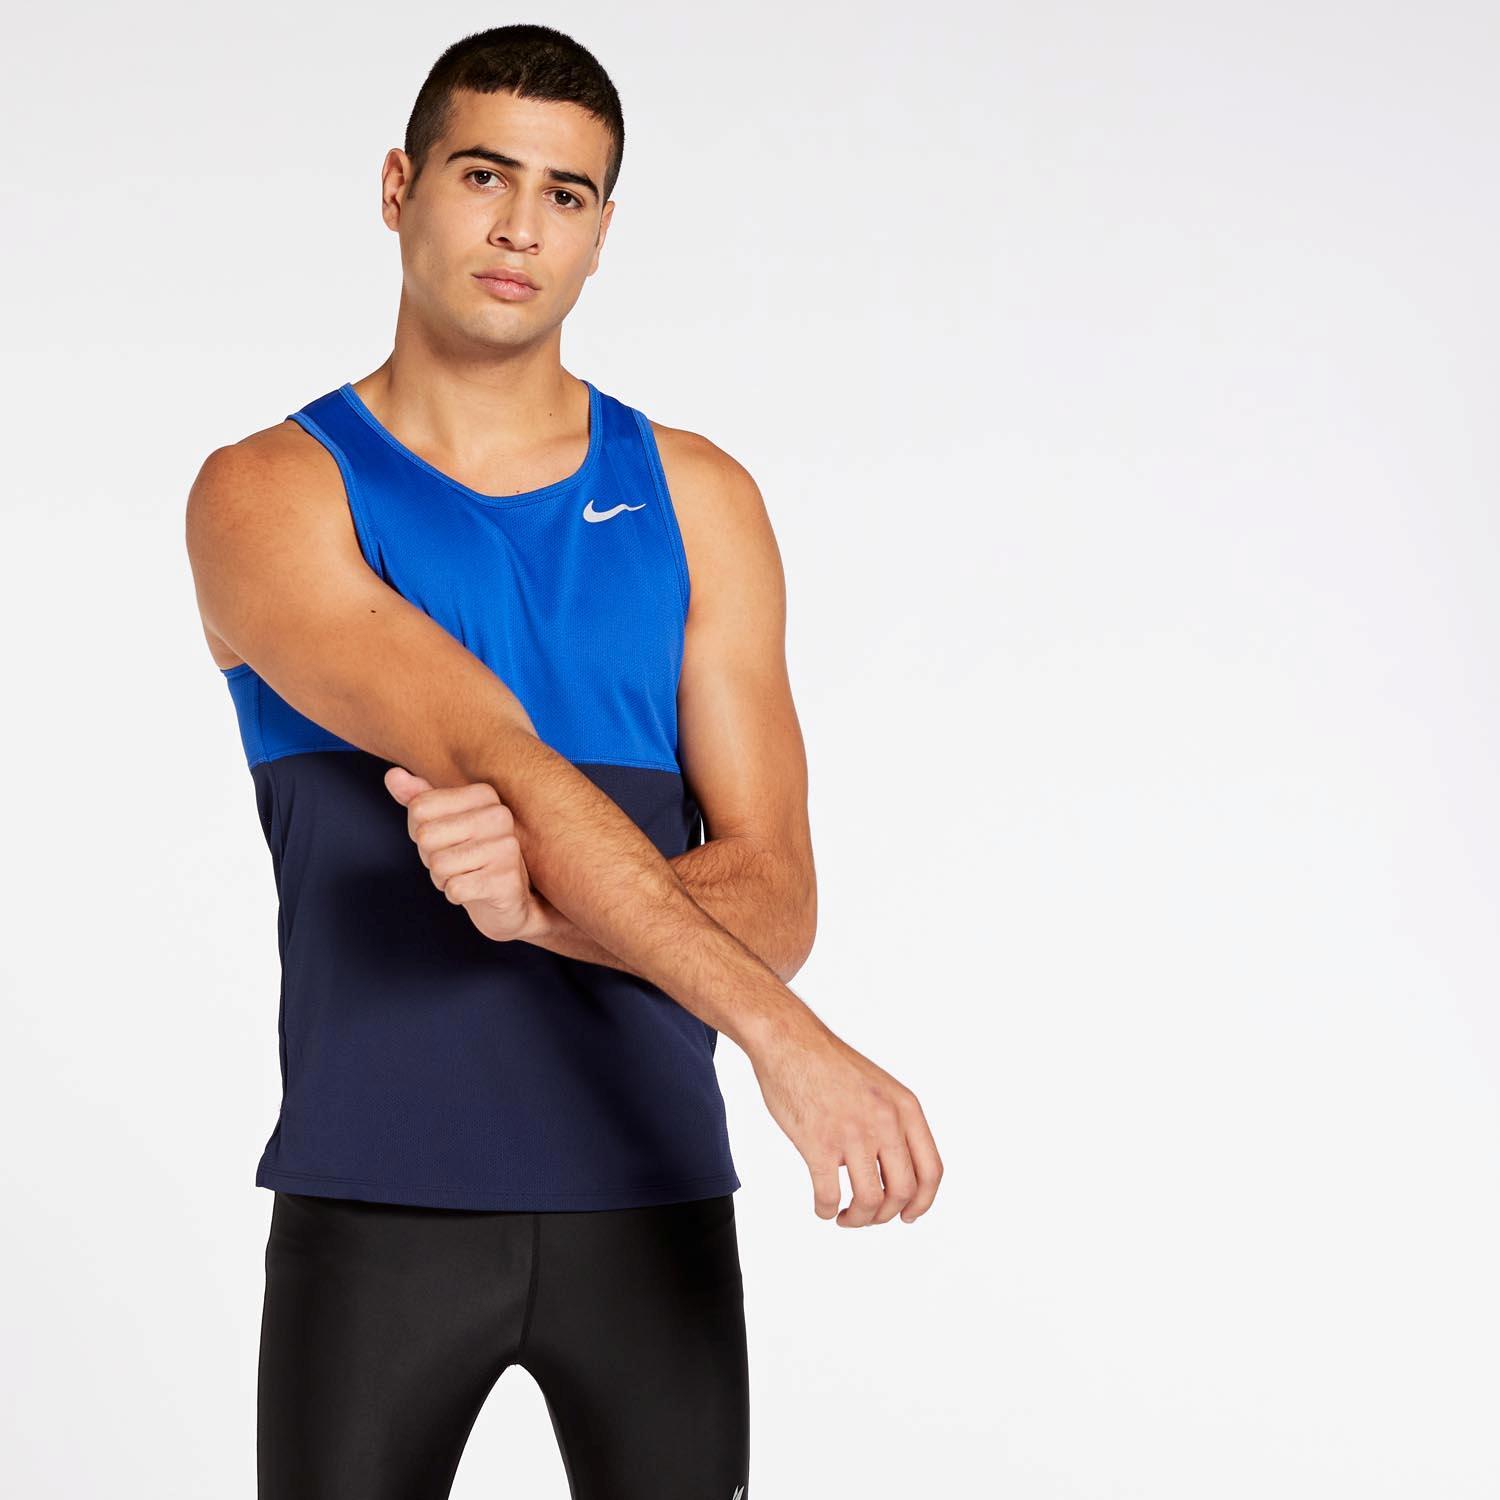 voz Guerrero Jirafa Nike Breathe- Azul - Camiseta Running Hombre | Sprinter